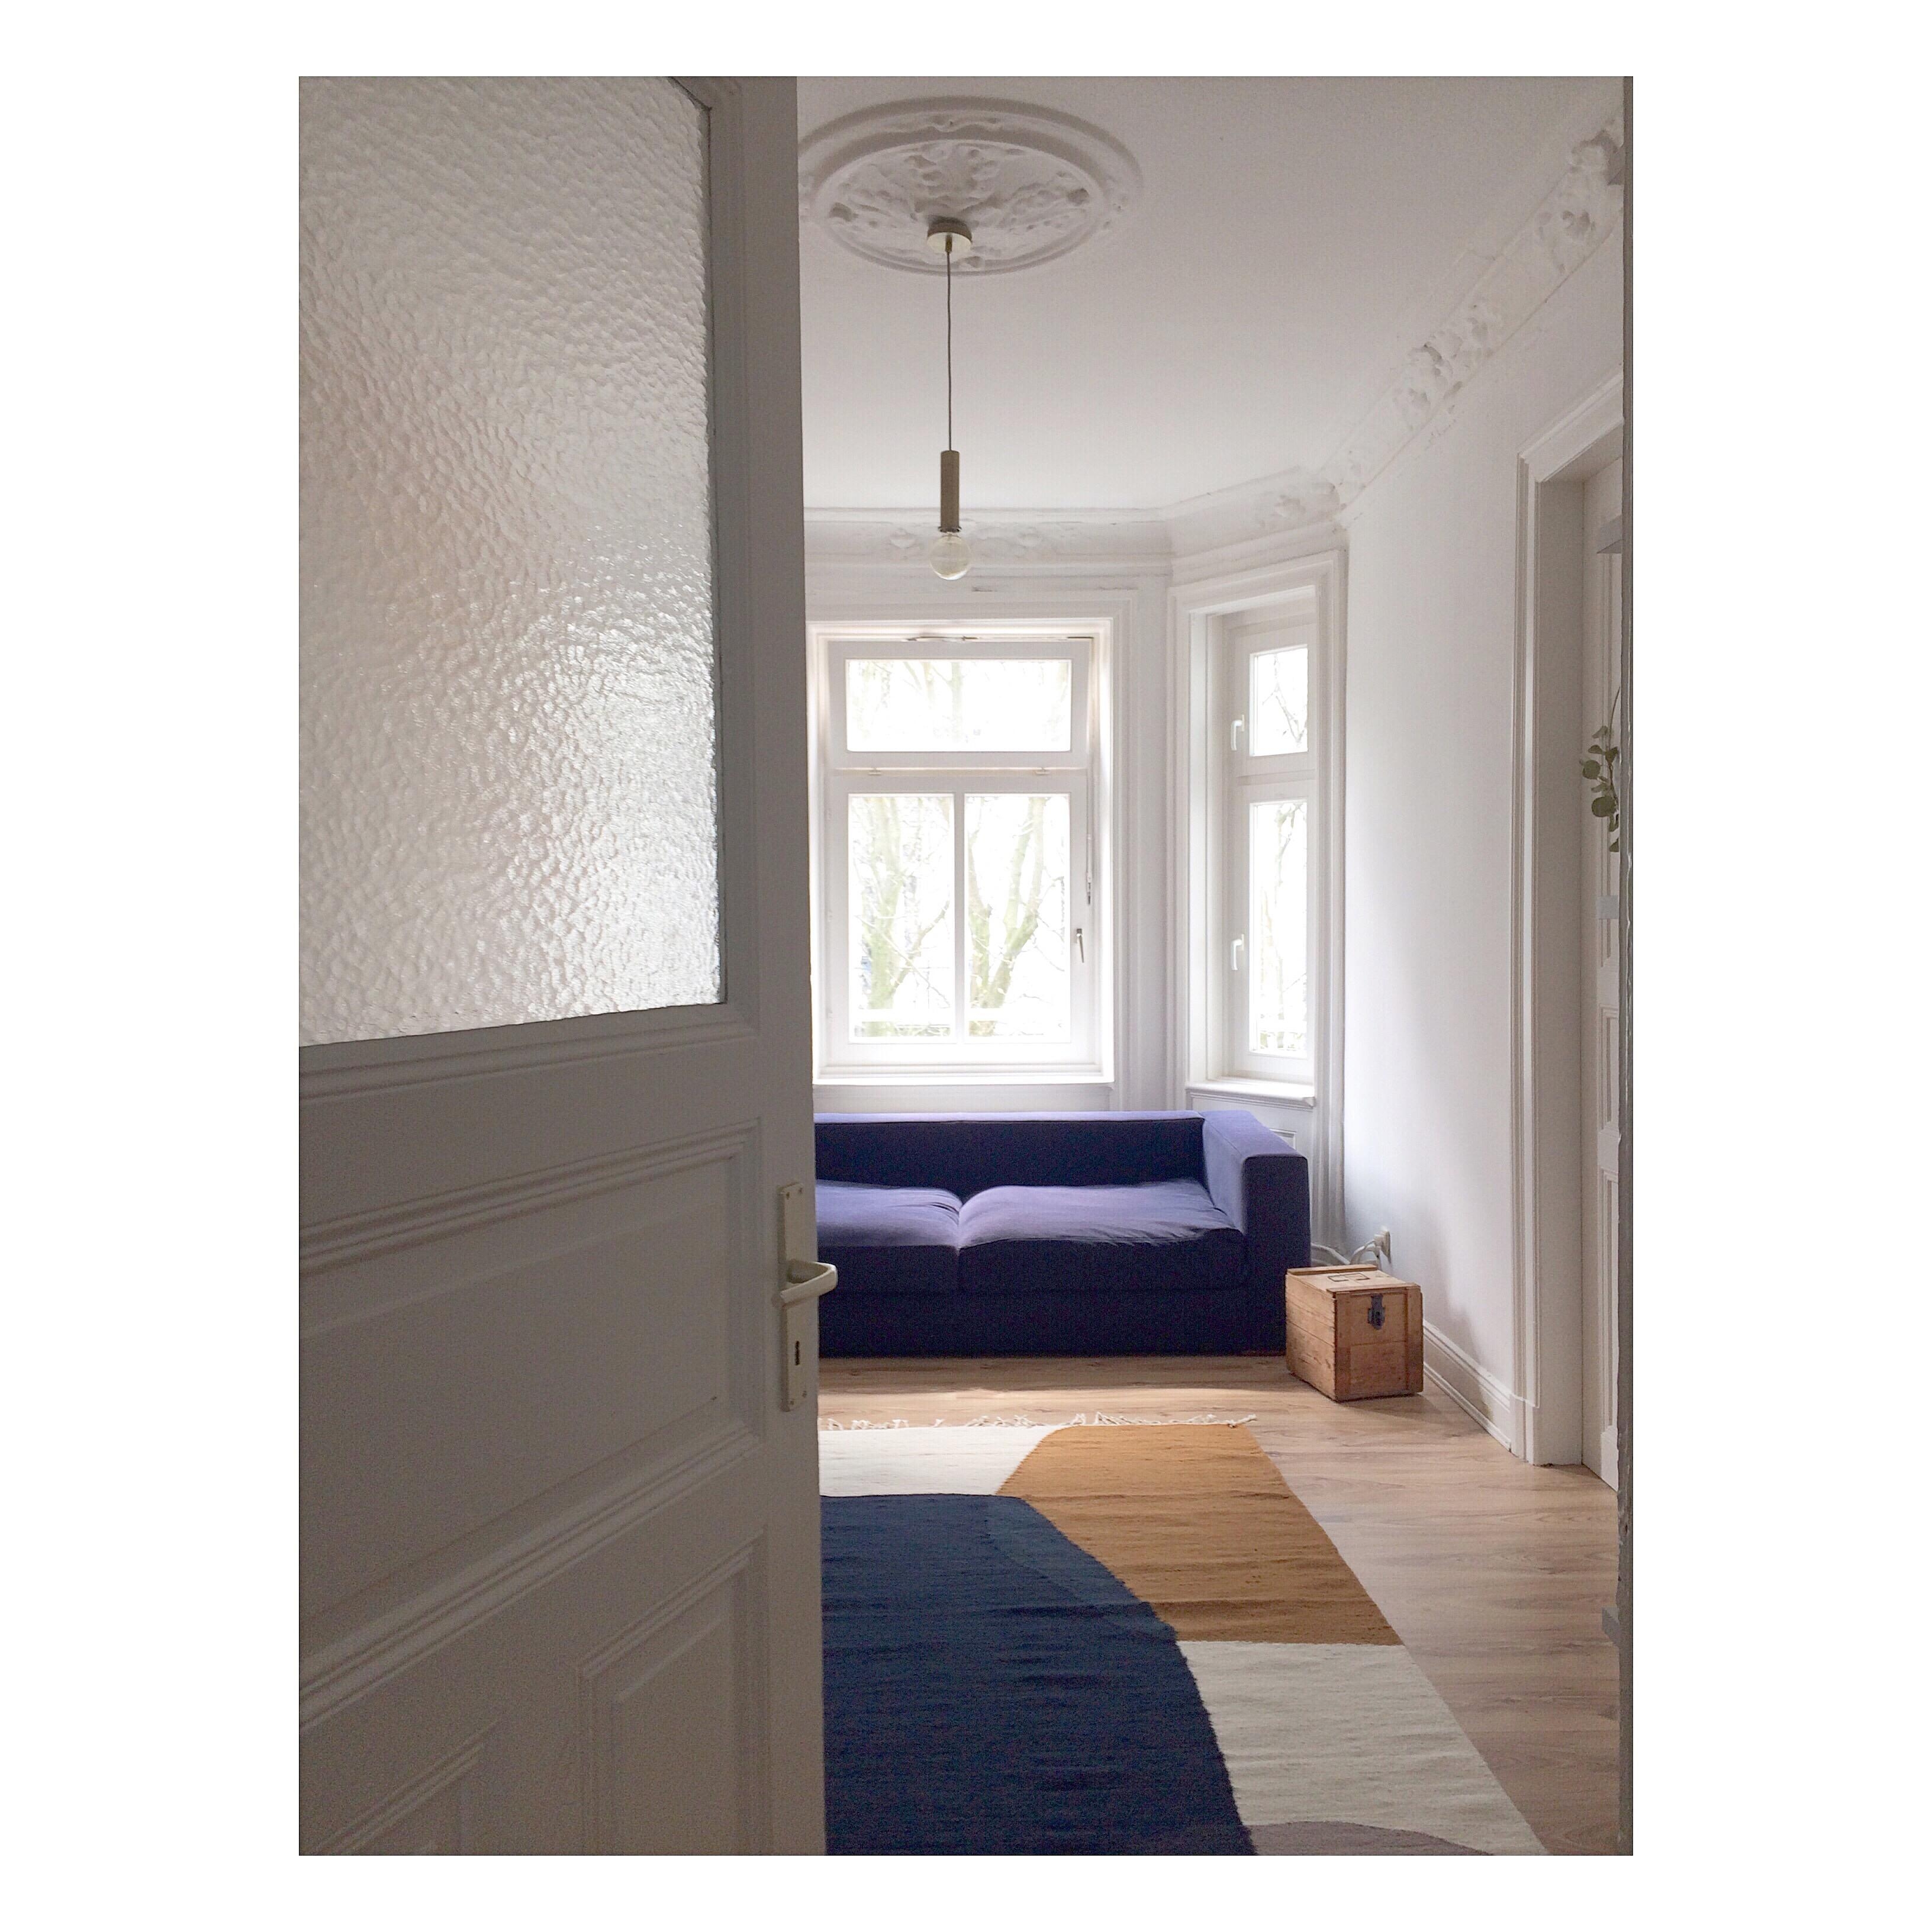 #interior
#scandinaviandesign
#minimalism